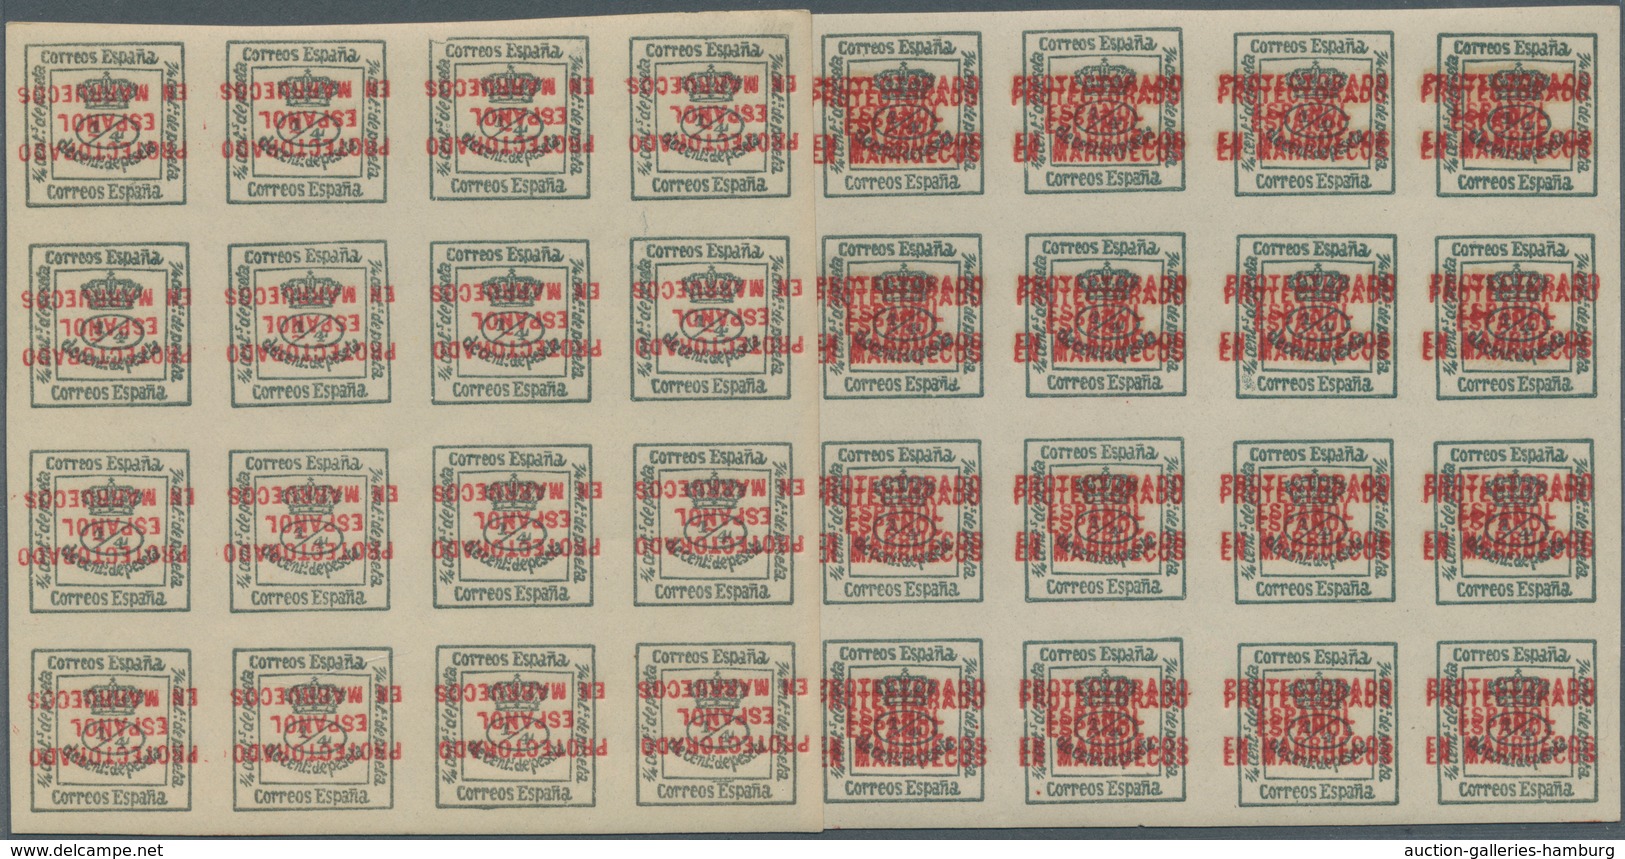 Spanisch-Marokko: 1915, Newspaper Stamp 4/4c. Green With INVERTED Red Overprint ‚PROTECTORADO / ESPA - Maroc Espagnol